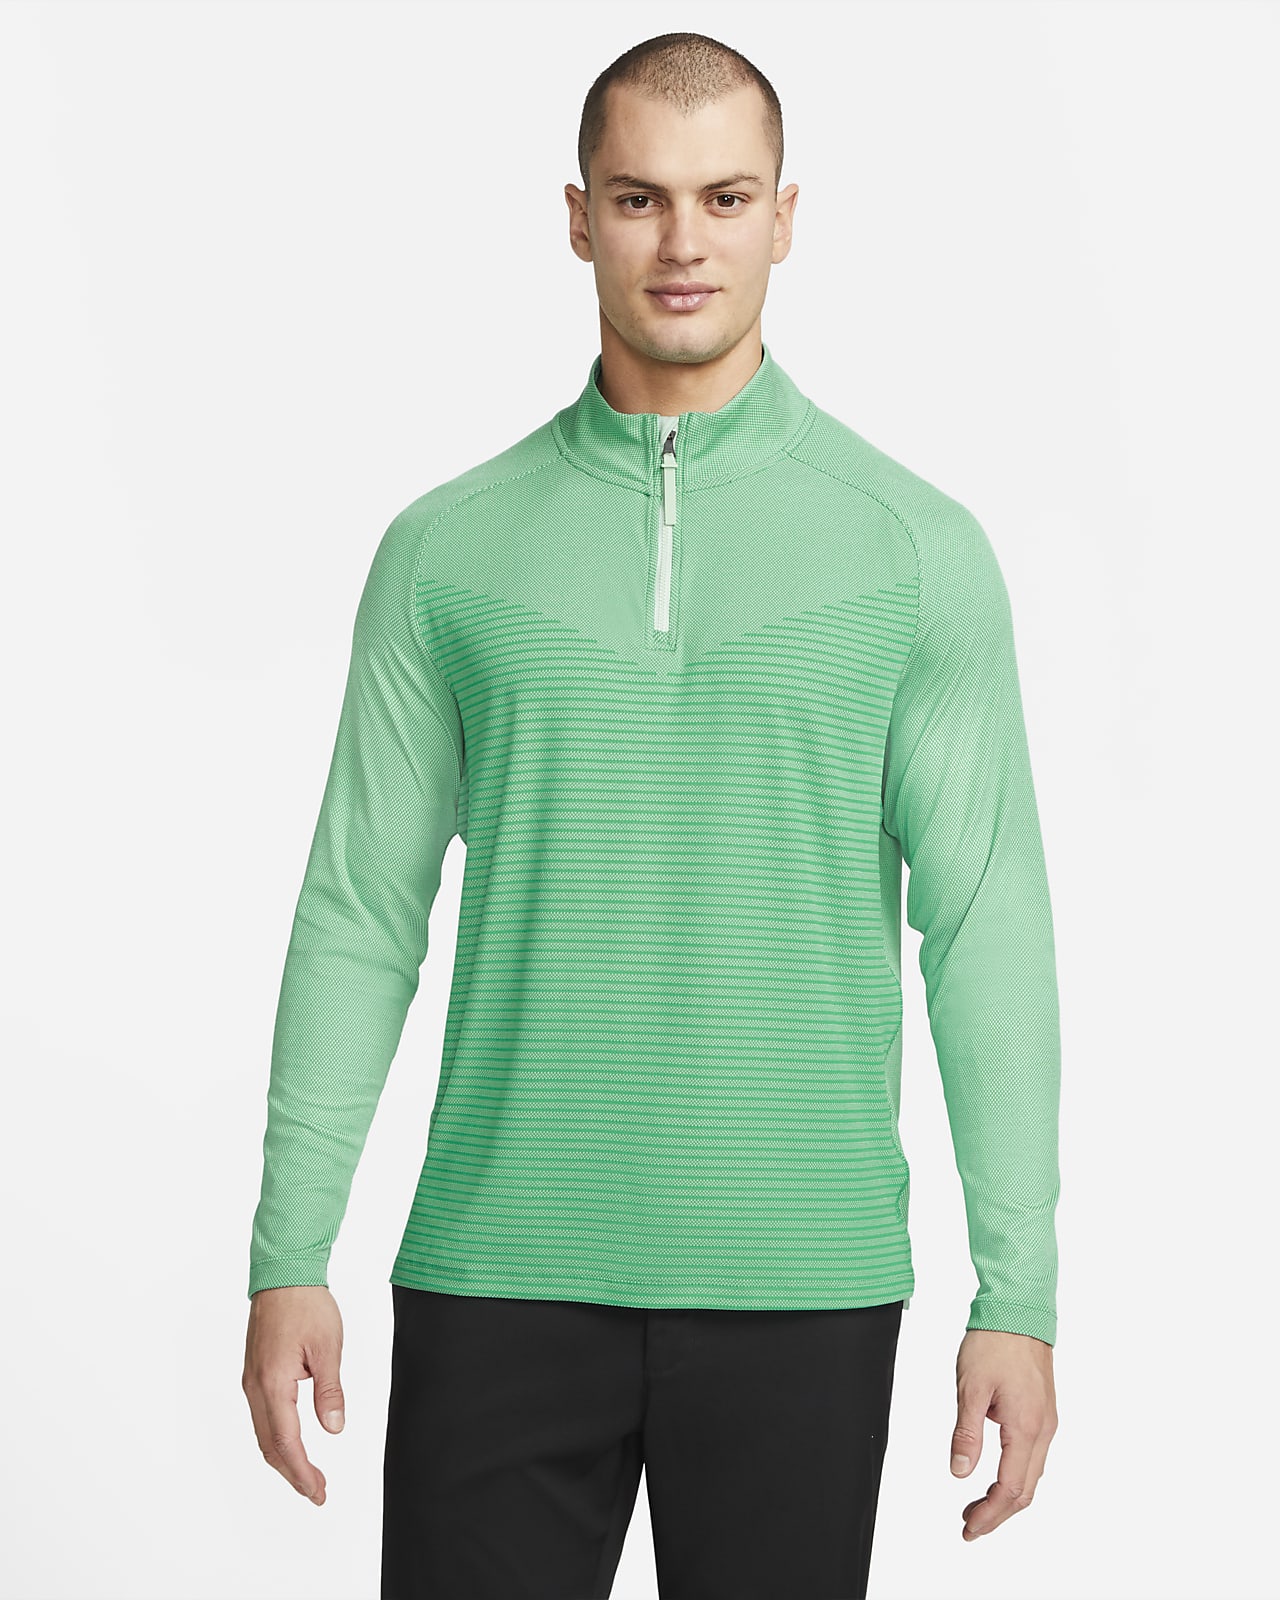 Nike Dri-FIT ADV Vapor Men's Quarter-Zip Golf Top